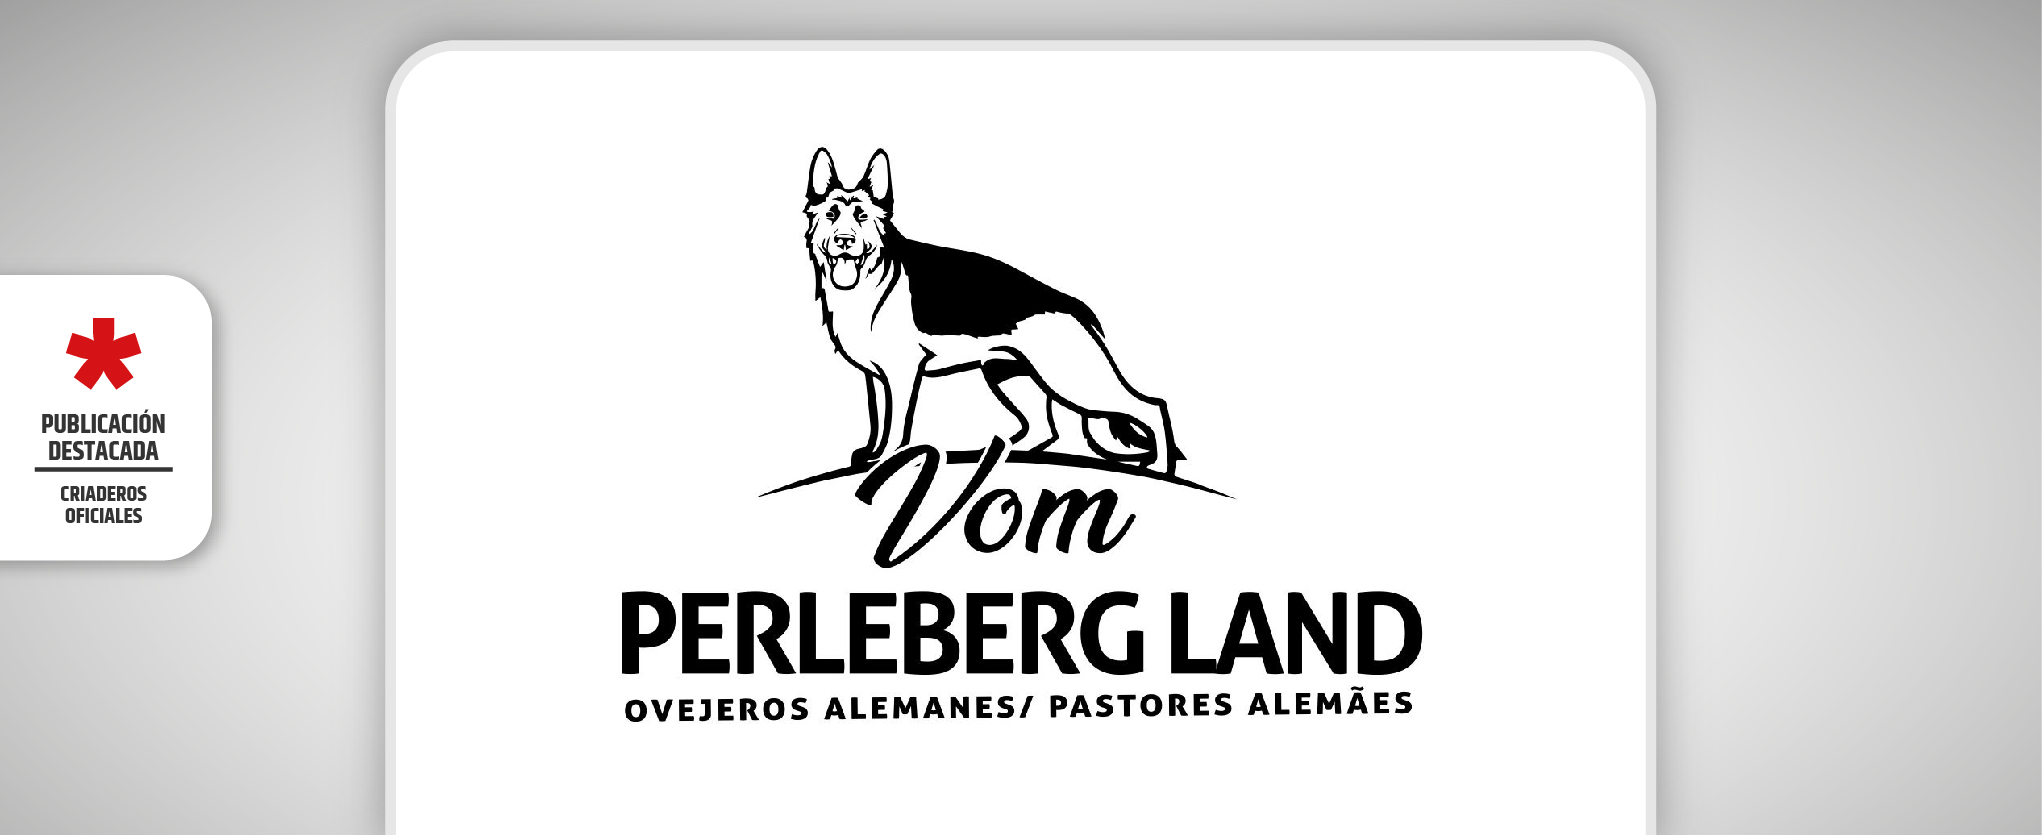 Photo of Vom Perleberg Land